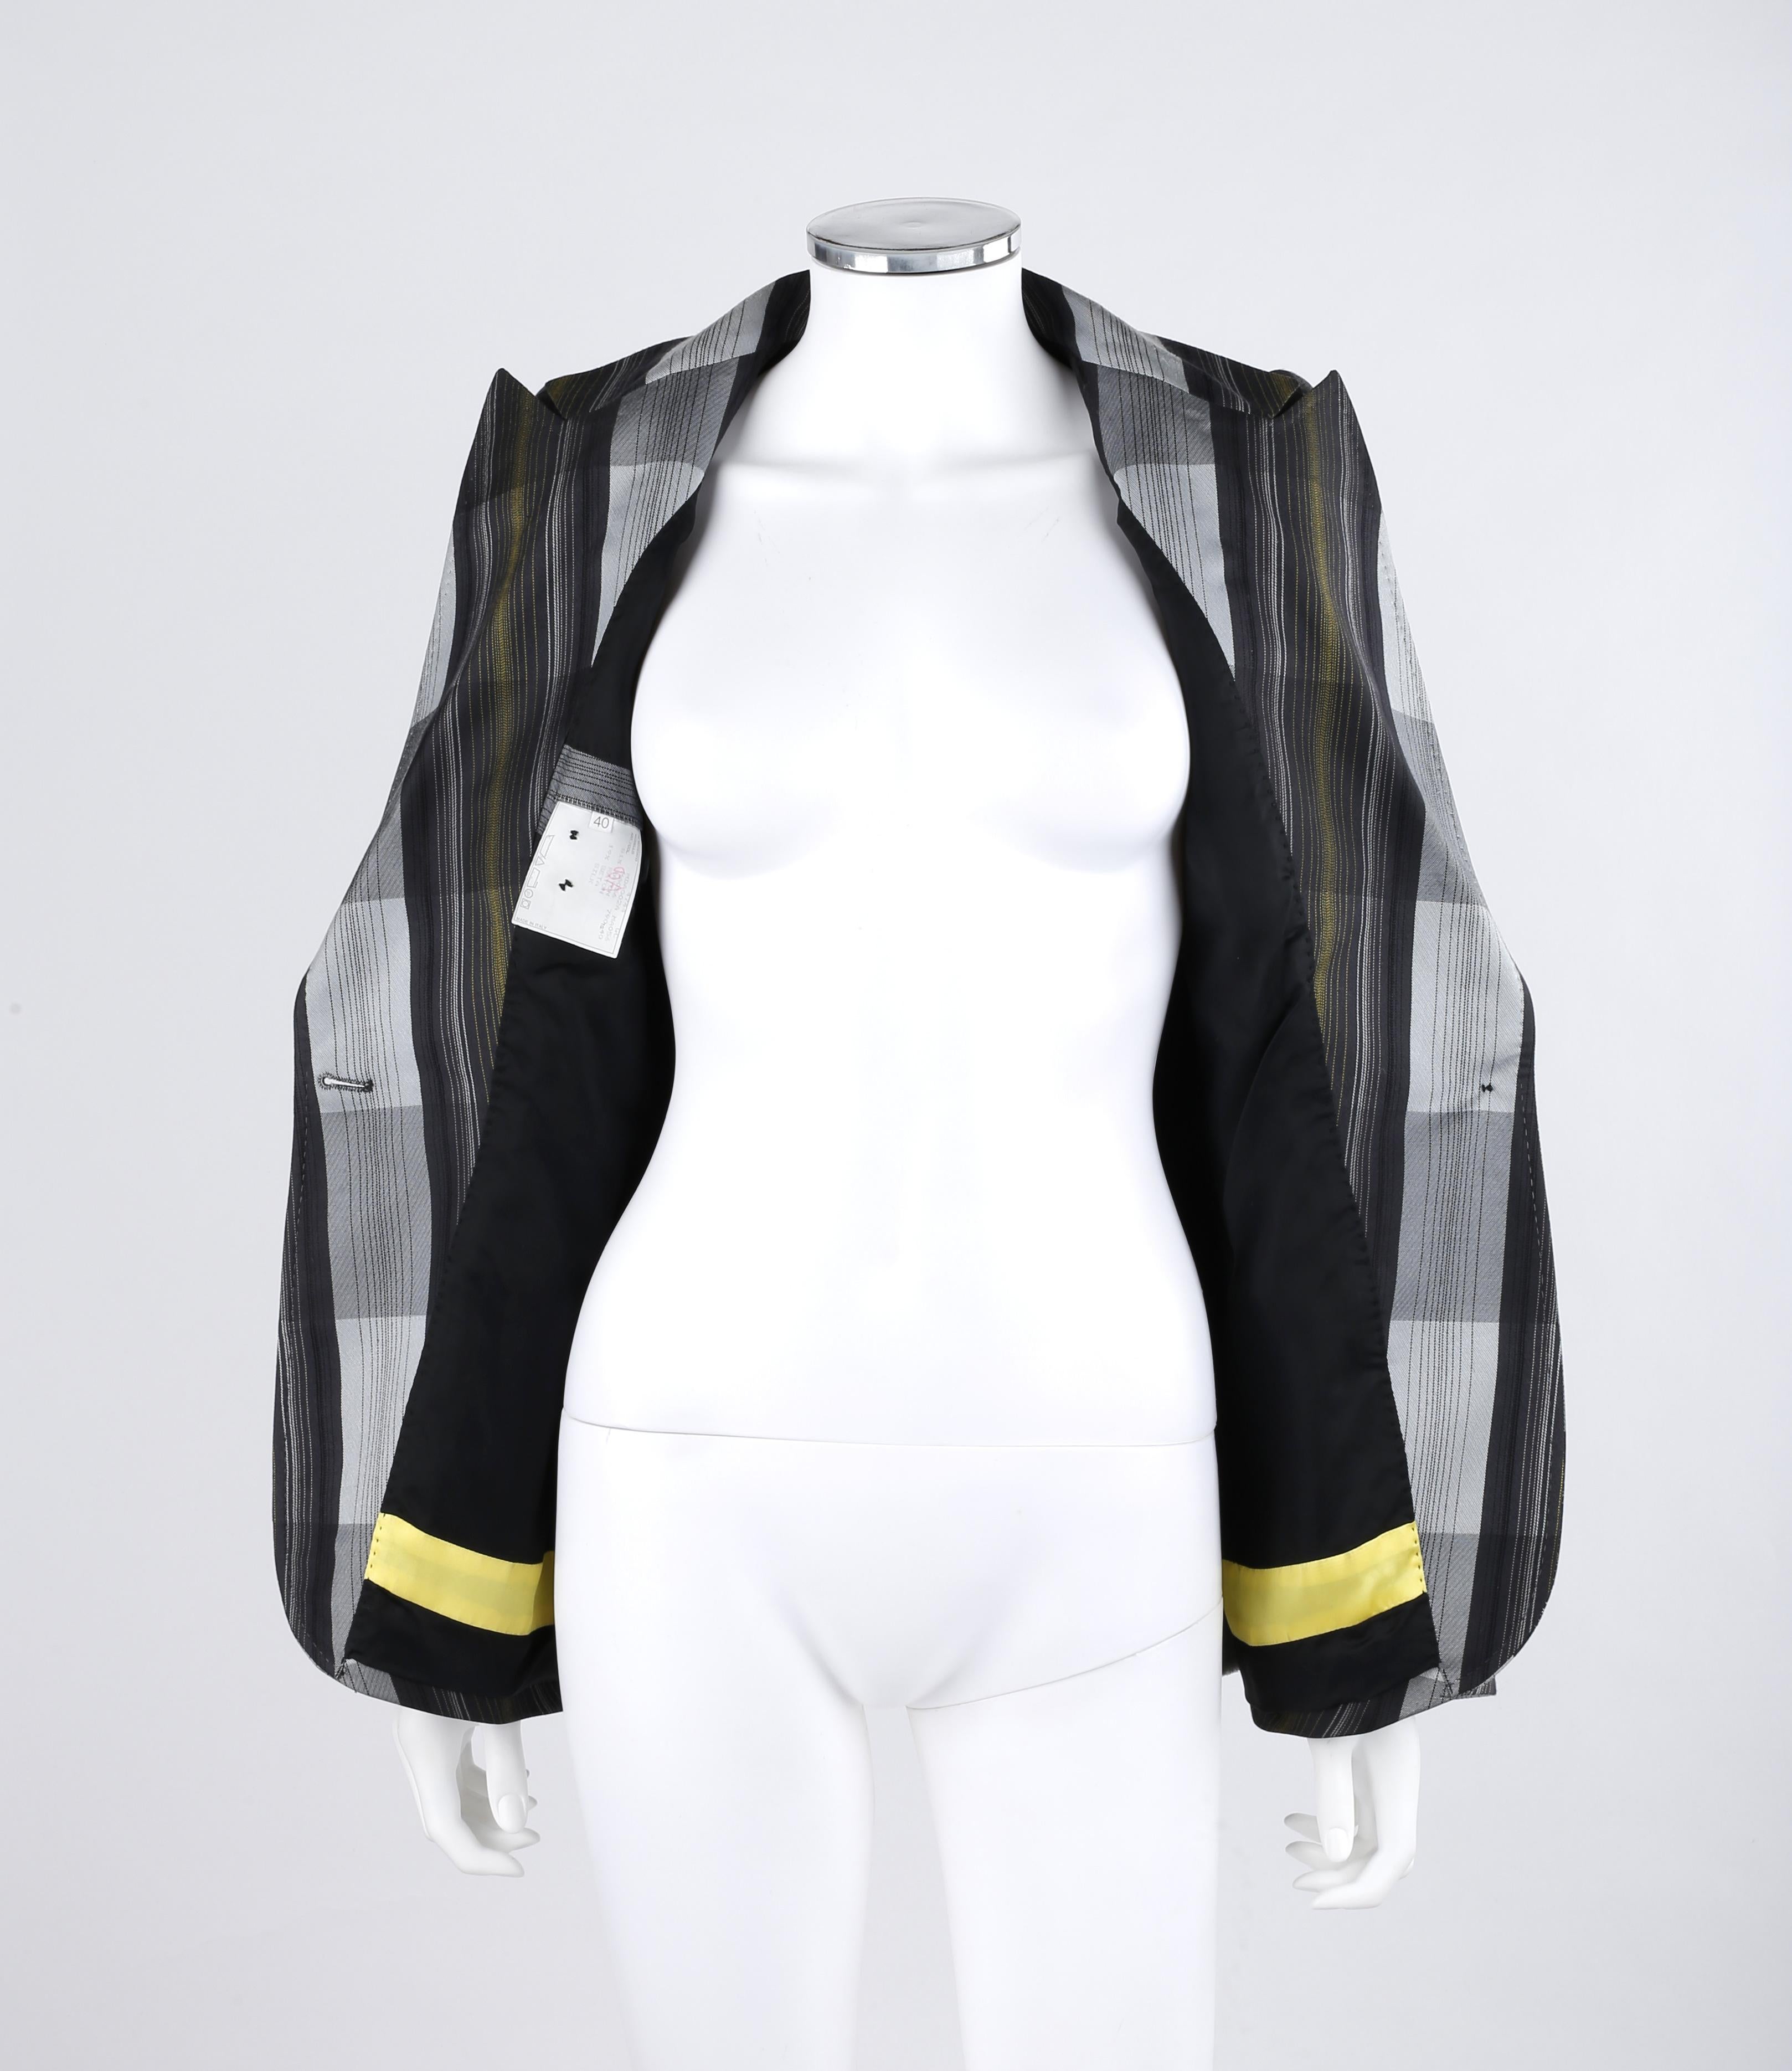 ALEXANDER McQUEEN A/W 2000 “Eshu” Gray / Black Chevron Tailored Blazer Jacket For Sale 1